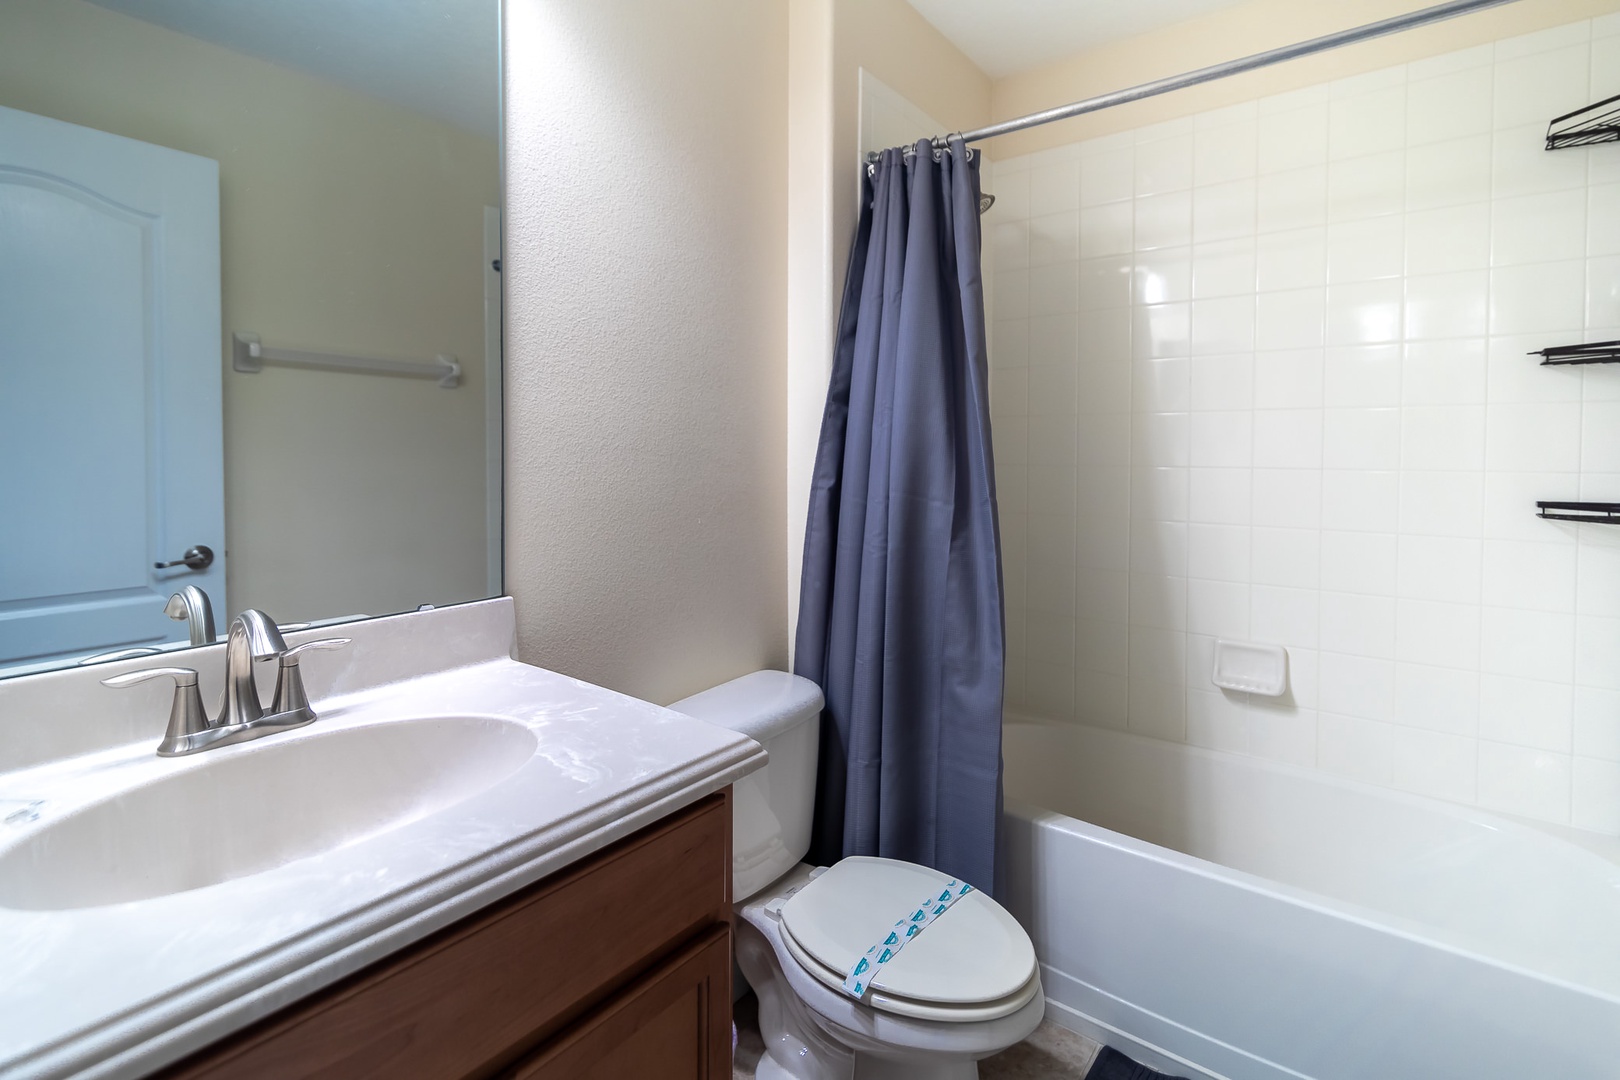 Second Floor Bathroom #4 Shower/Tub Combo